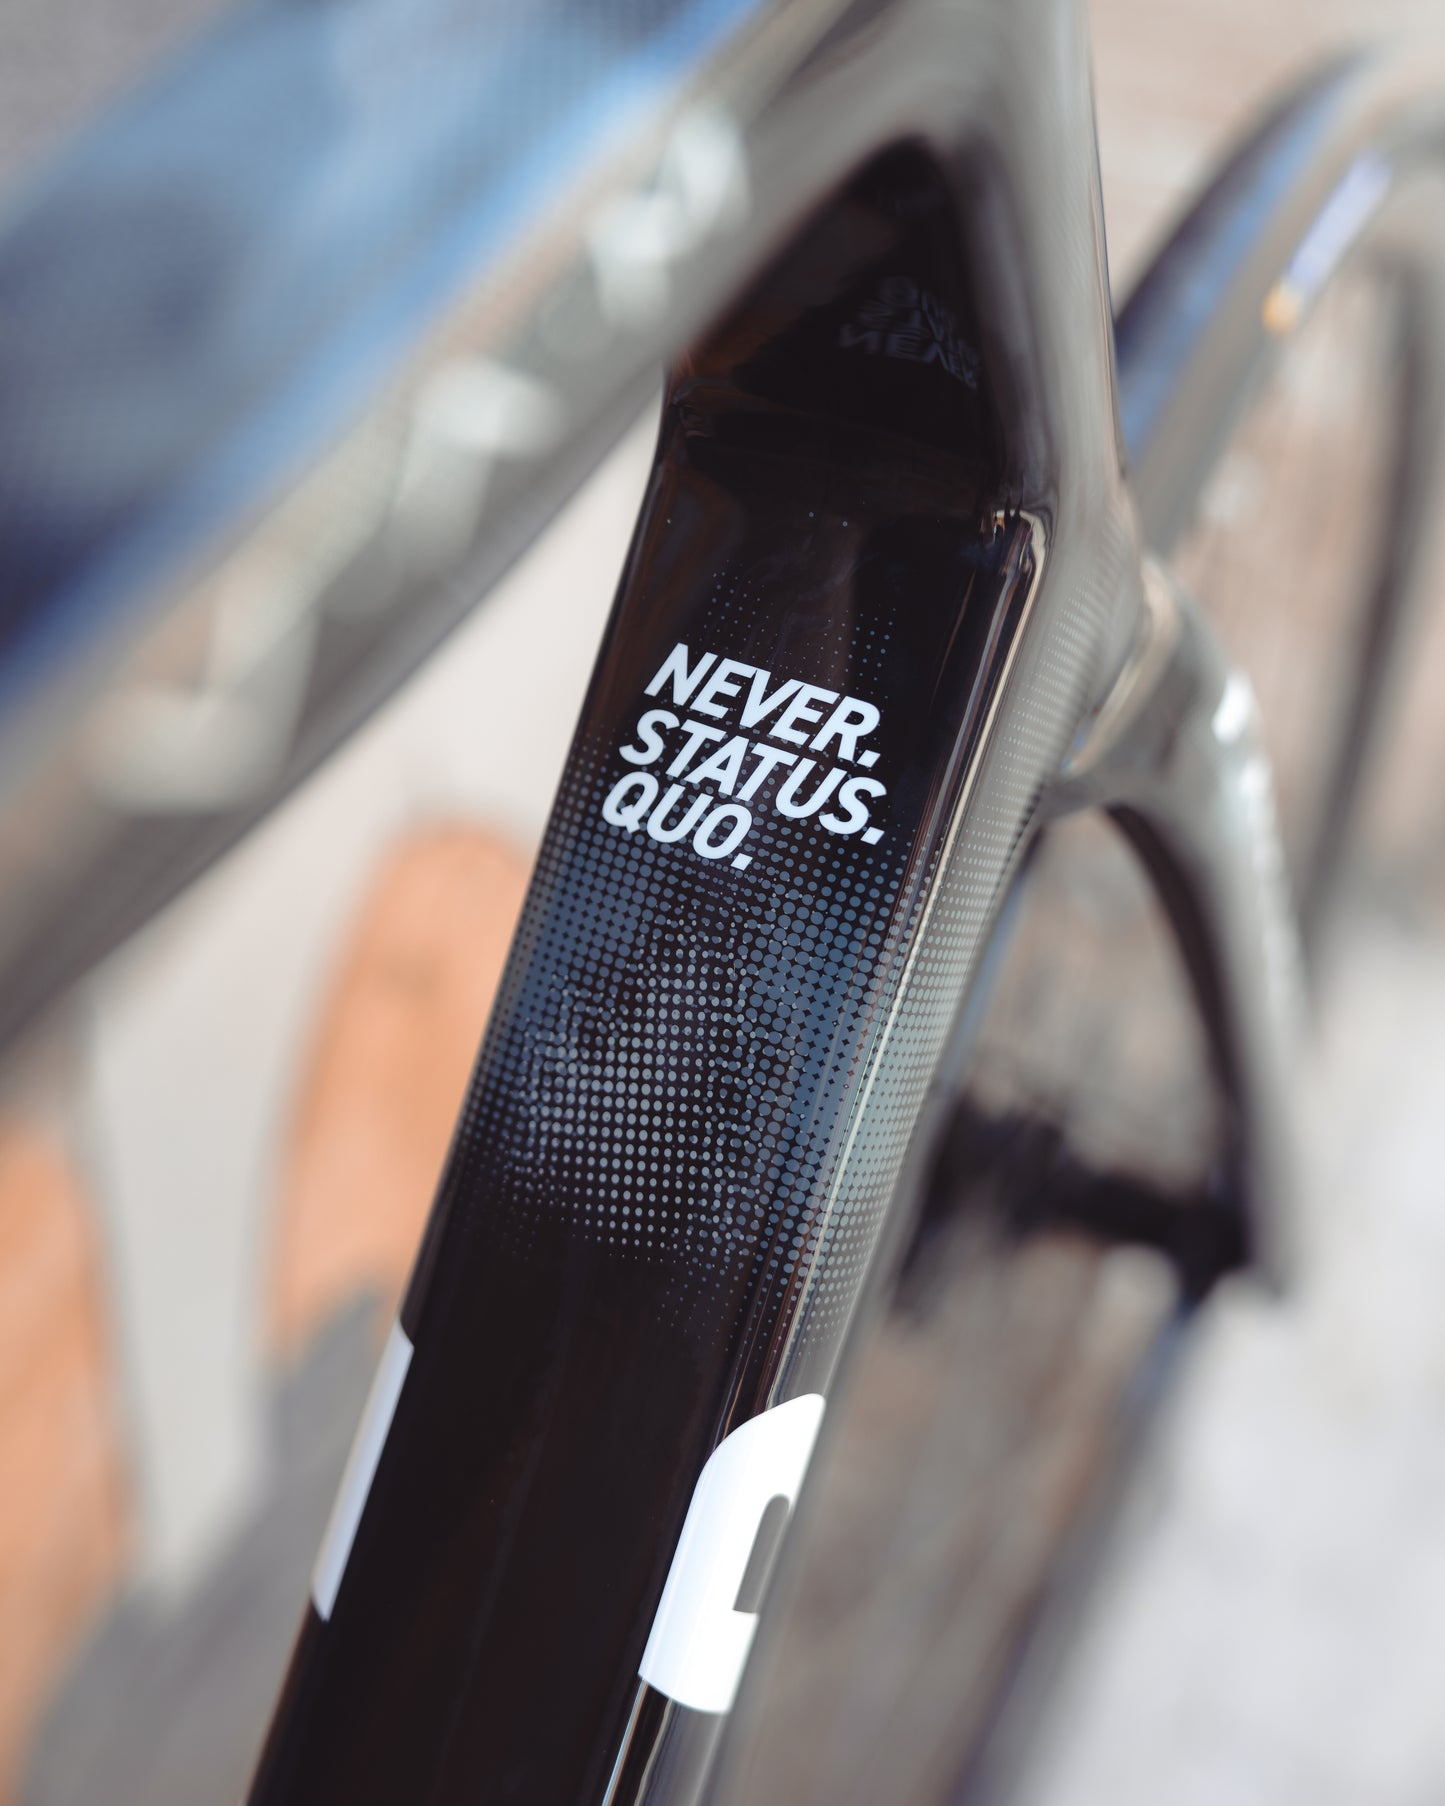 Bicicleta Factor O2 VAM - Cuadro kit